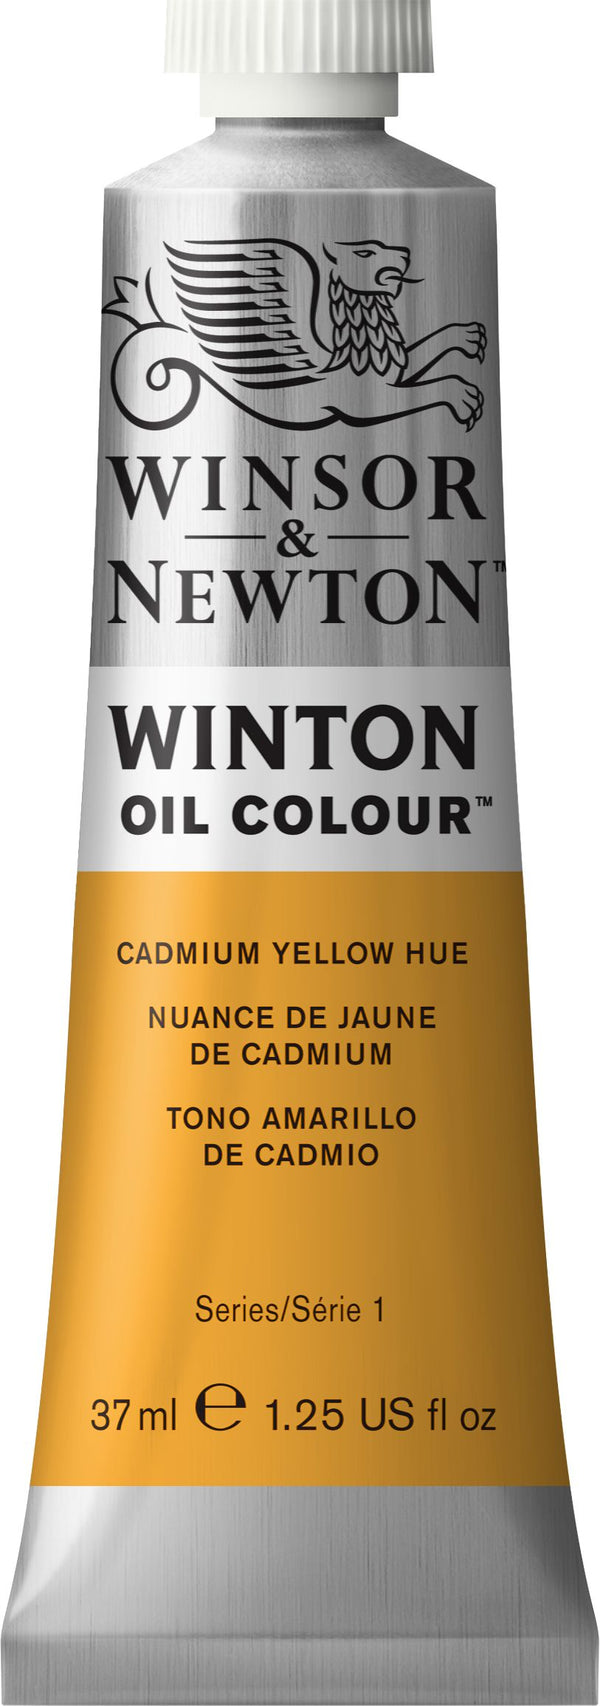 Winton Oil Colour Cadmium Yellow Hue - 37ml tube